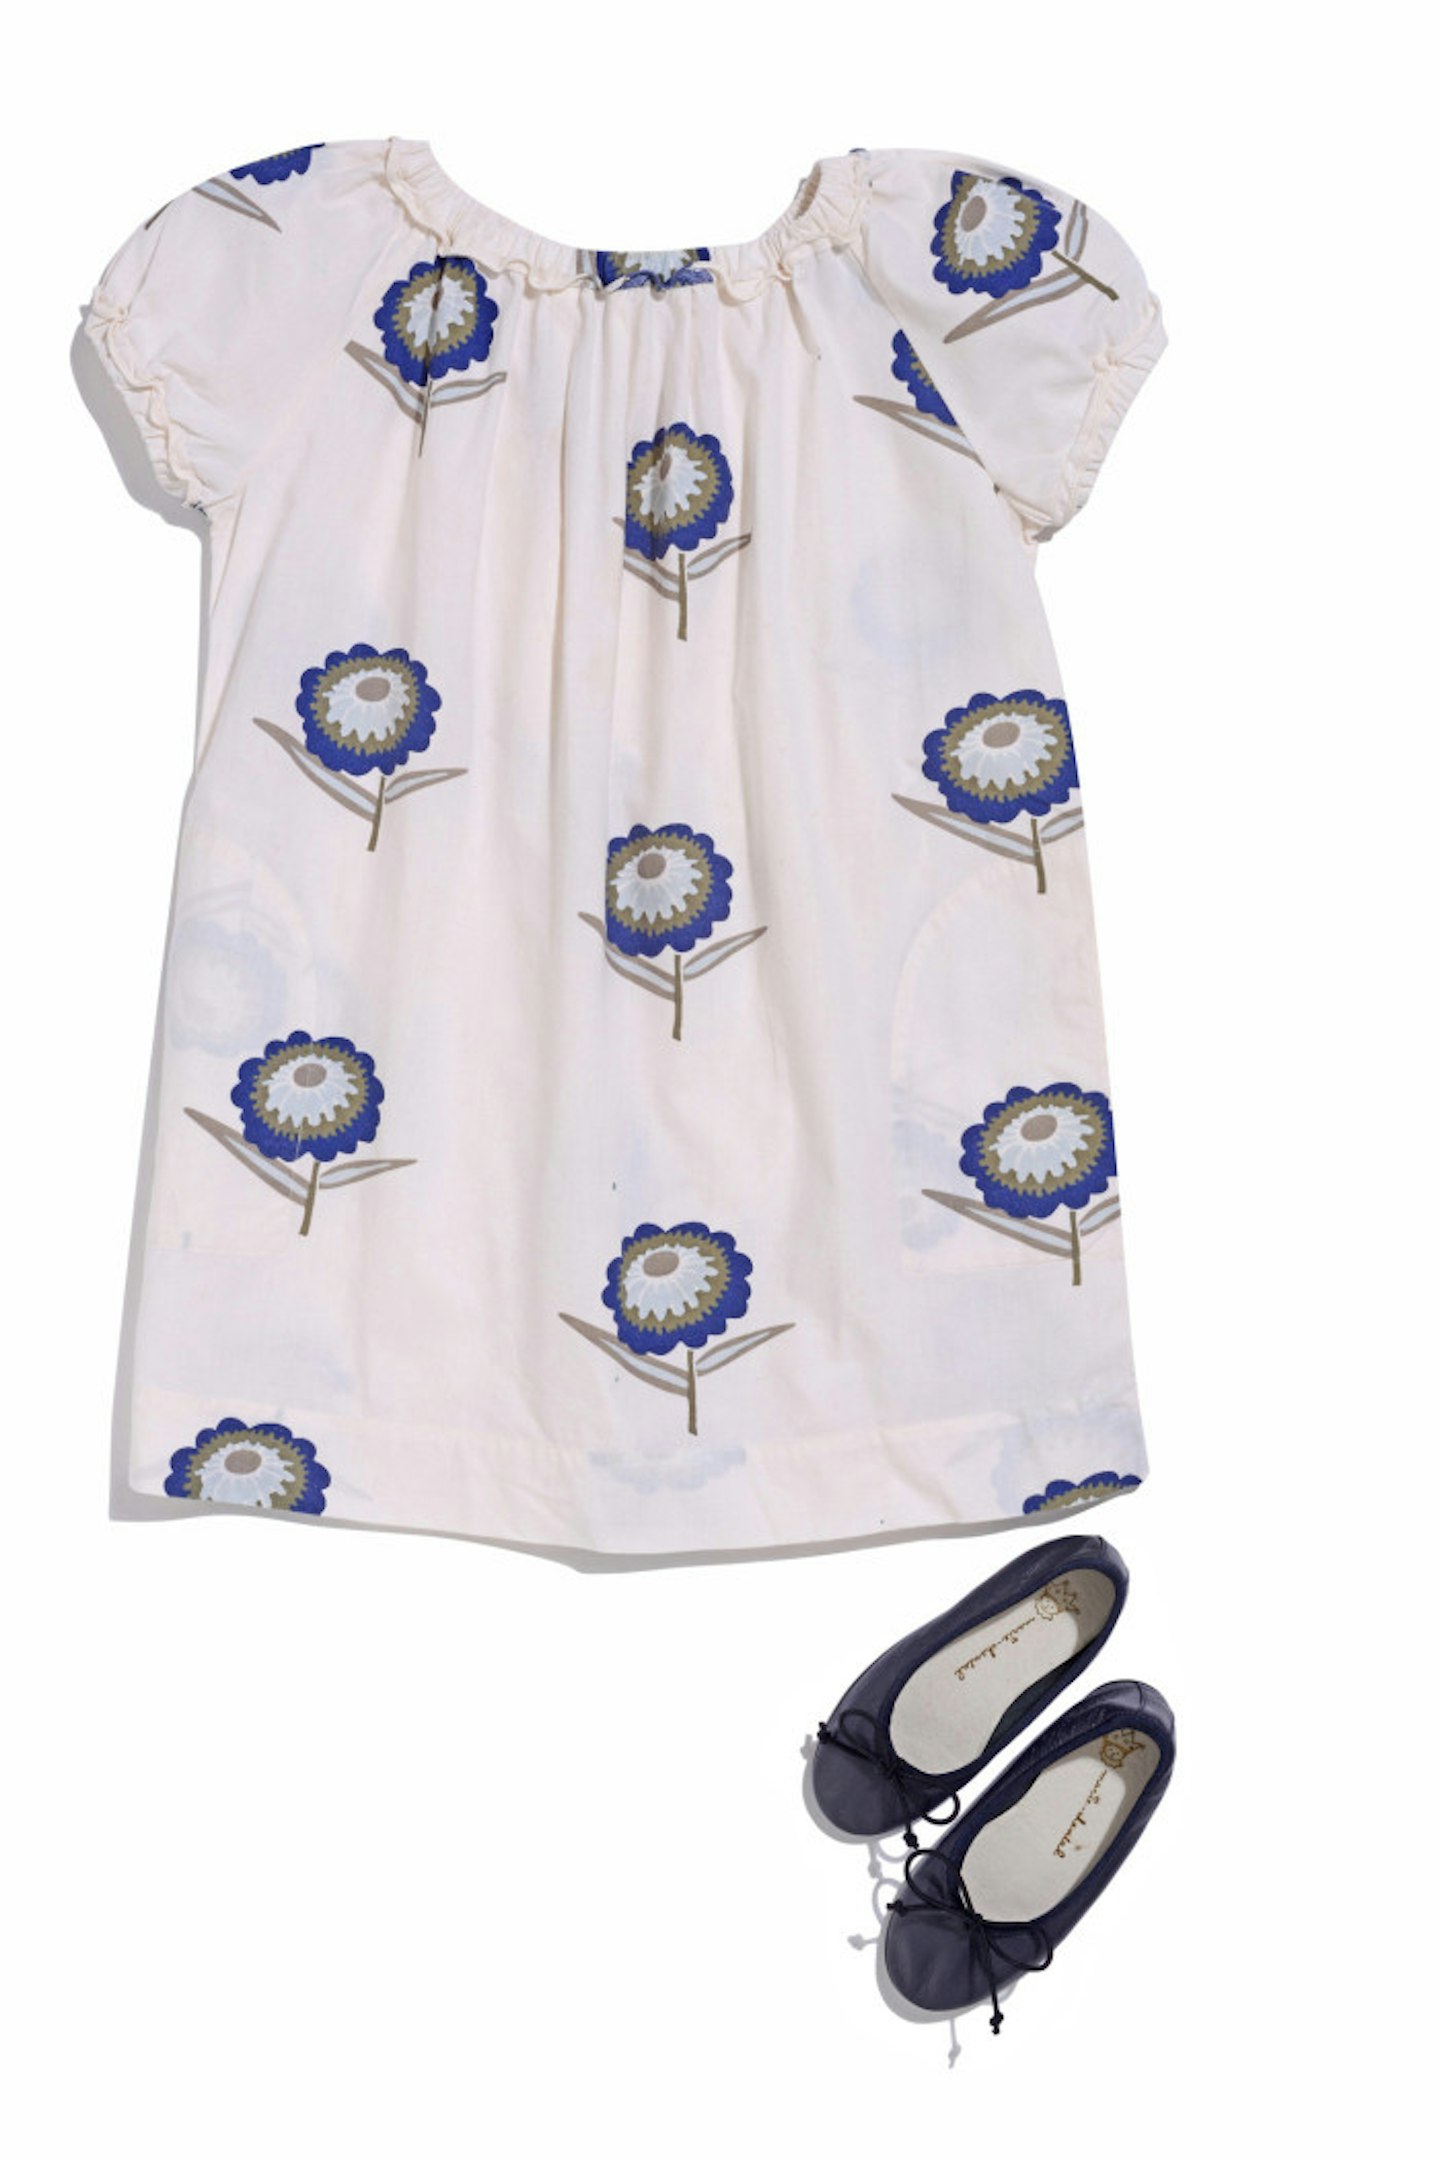 Bonpoint cream blue flower dress and Marie Chantal blue pumps